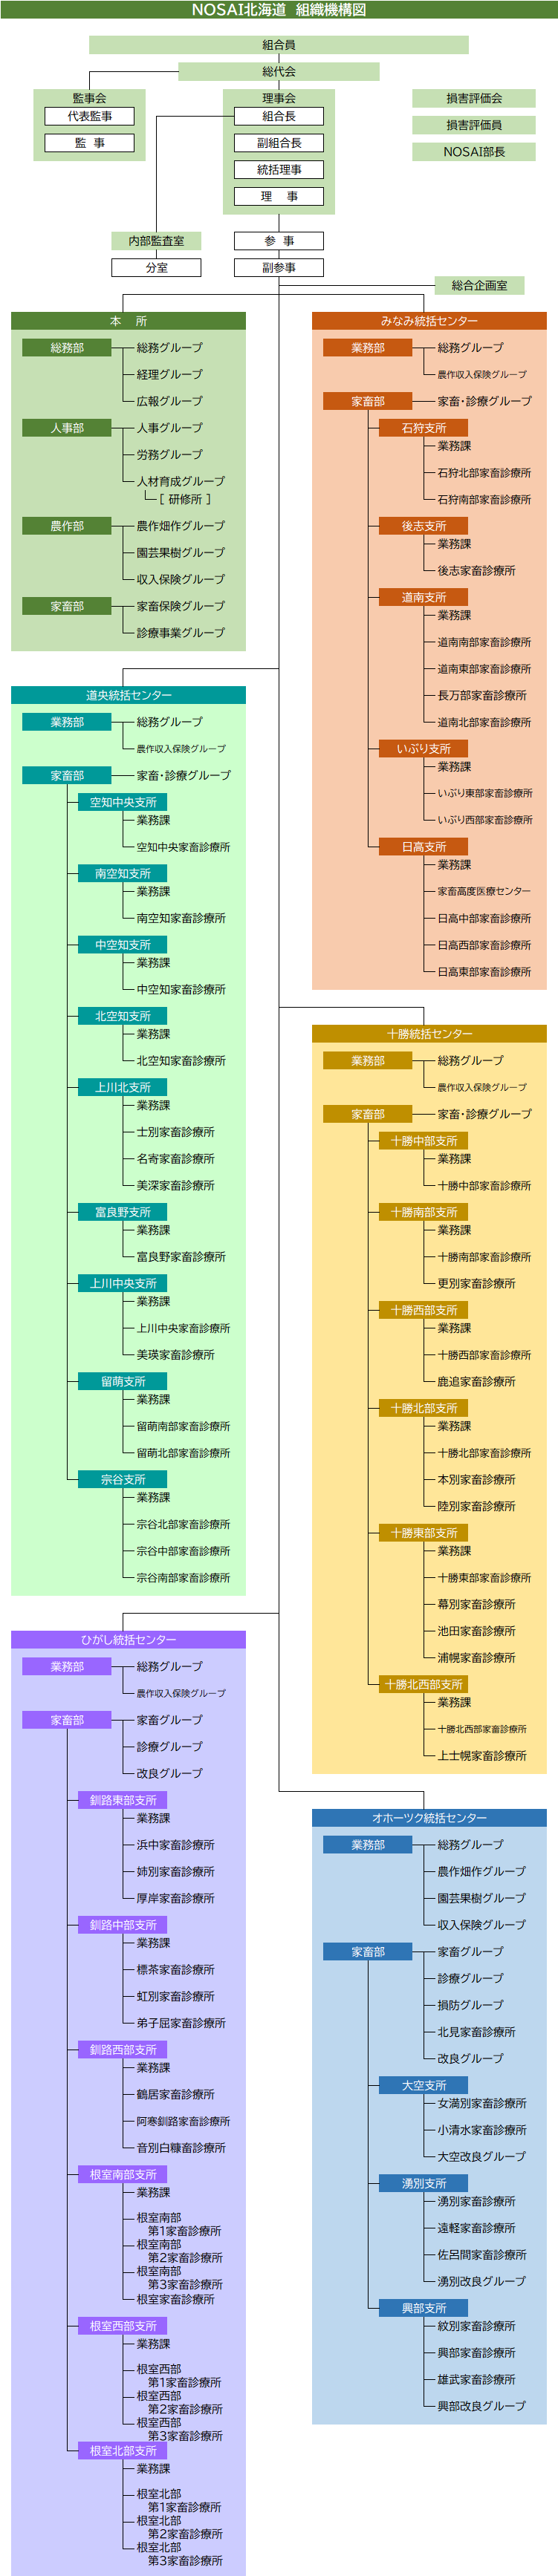 NOSAI北海道 機構図